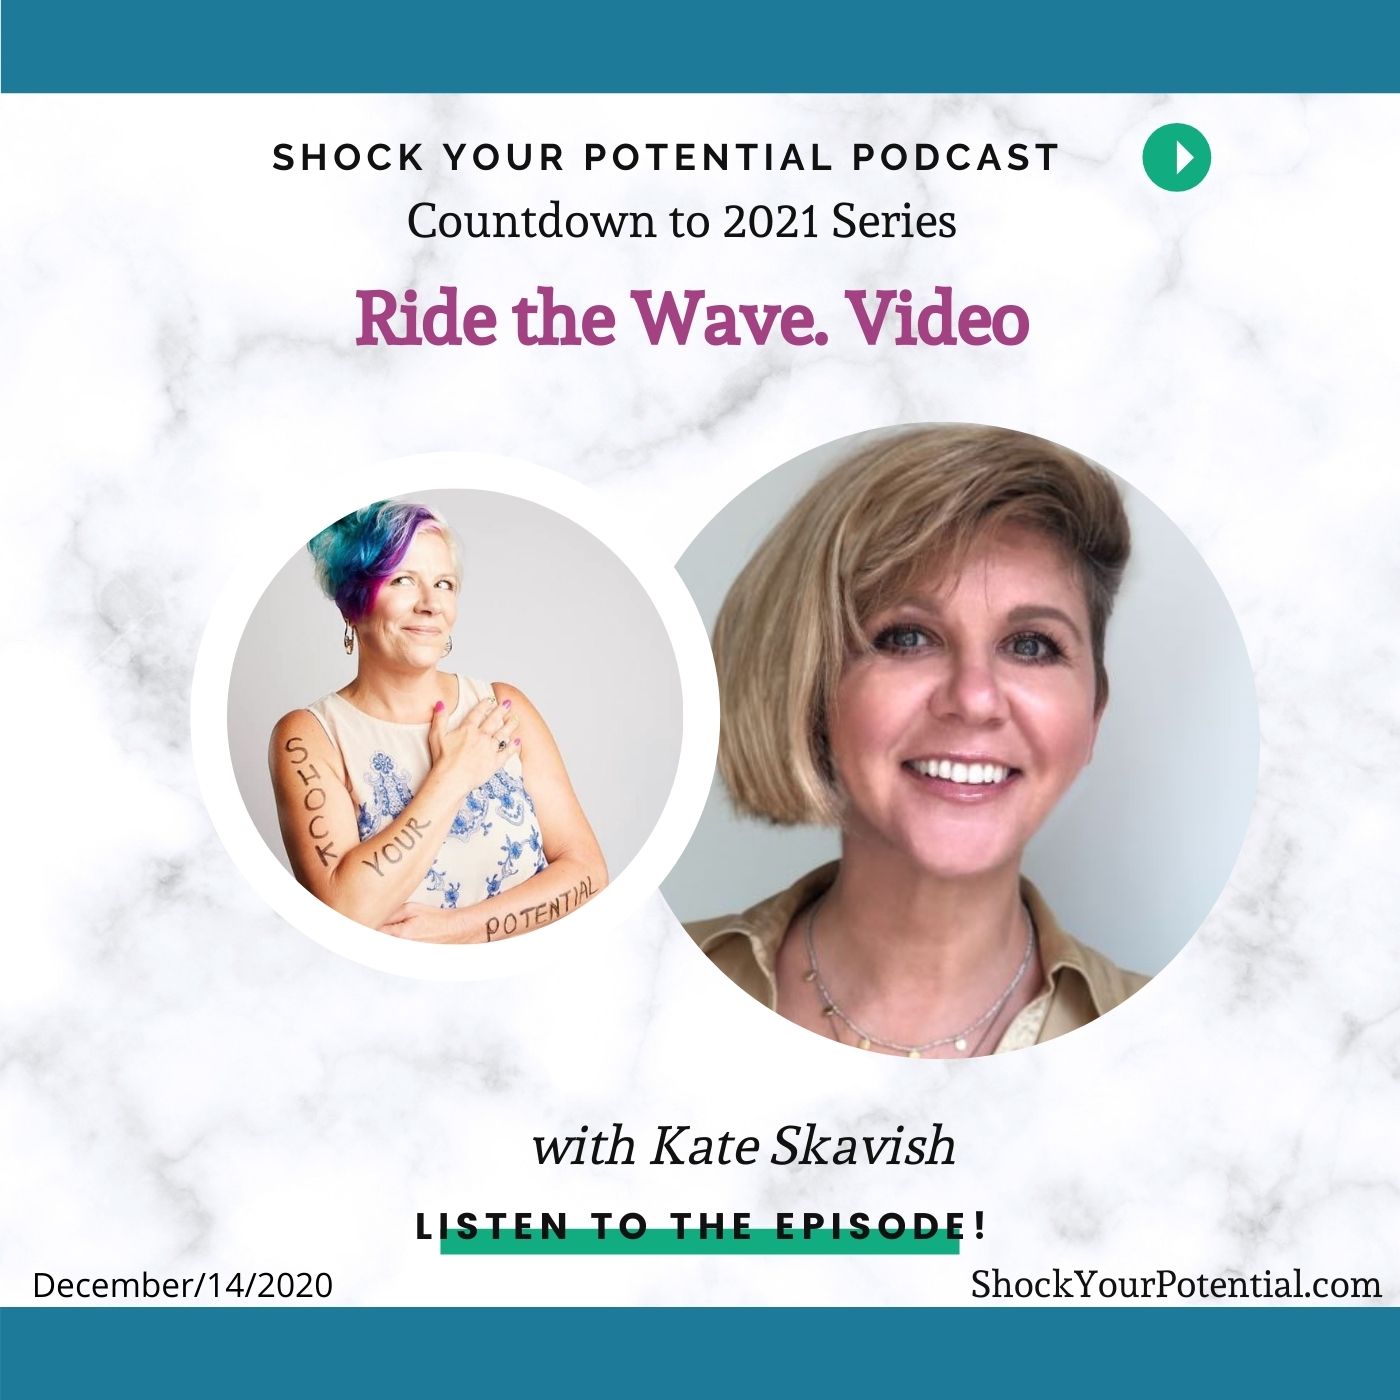 Ride the Wave.Video – Kate Skavish